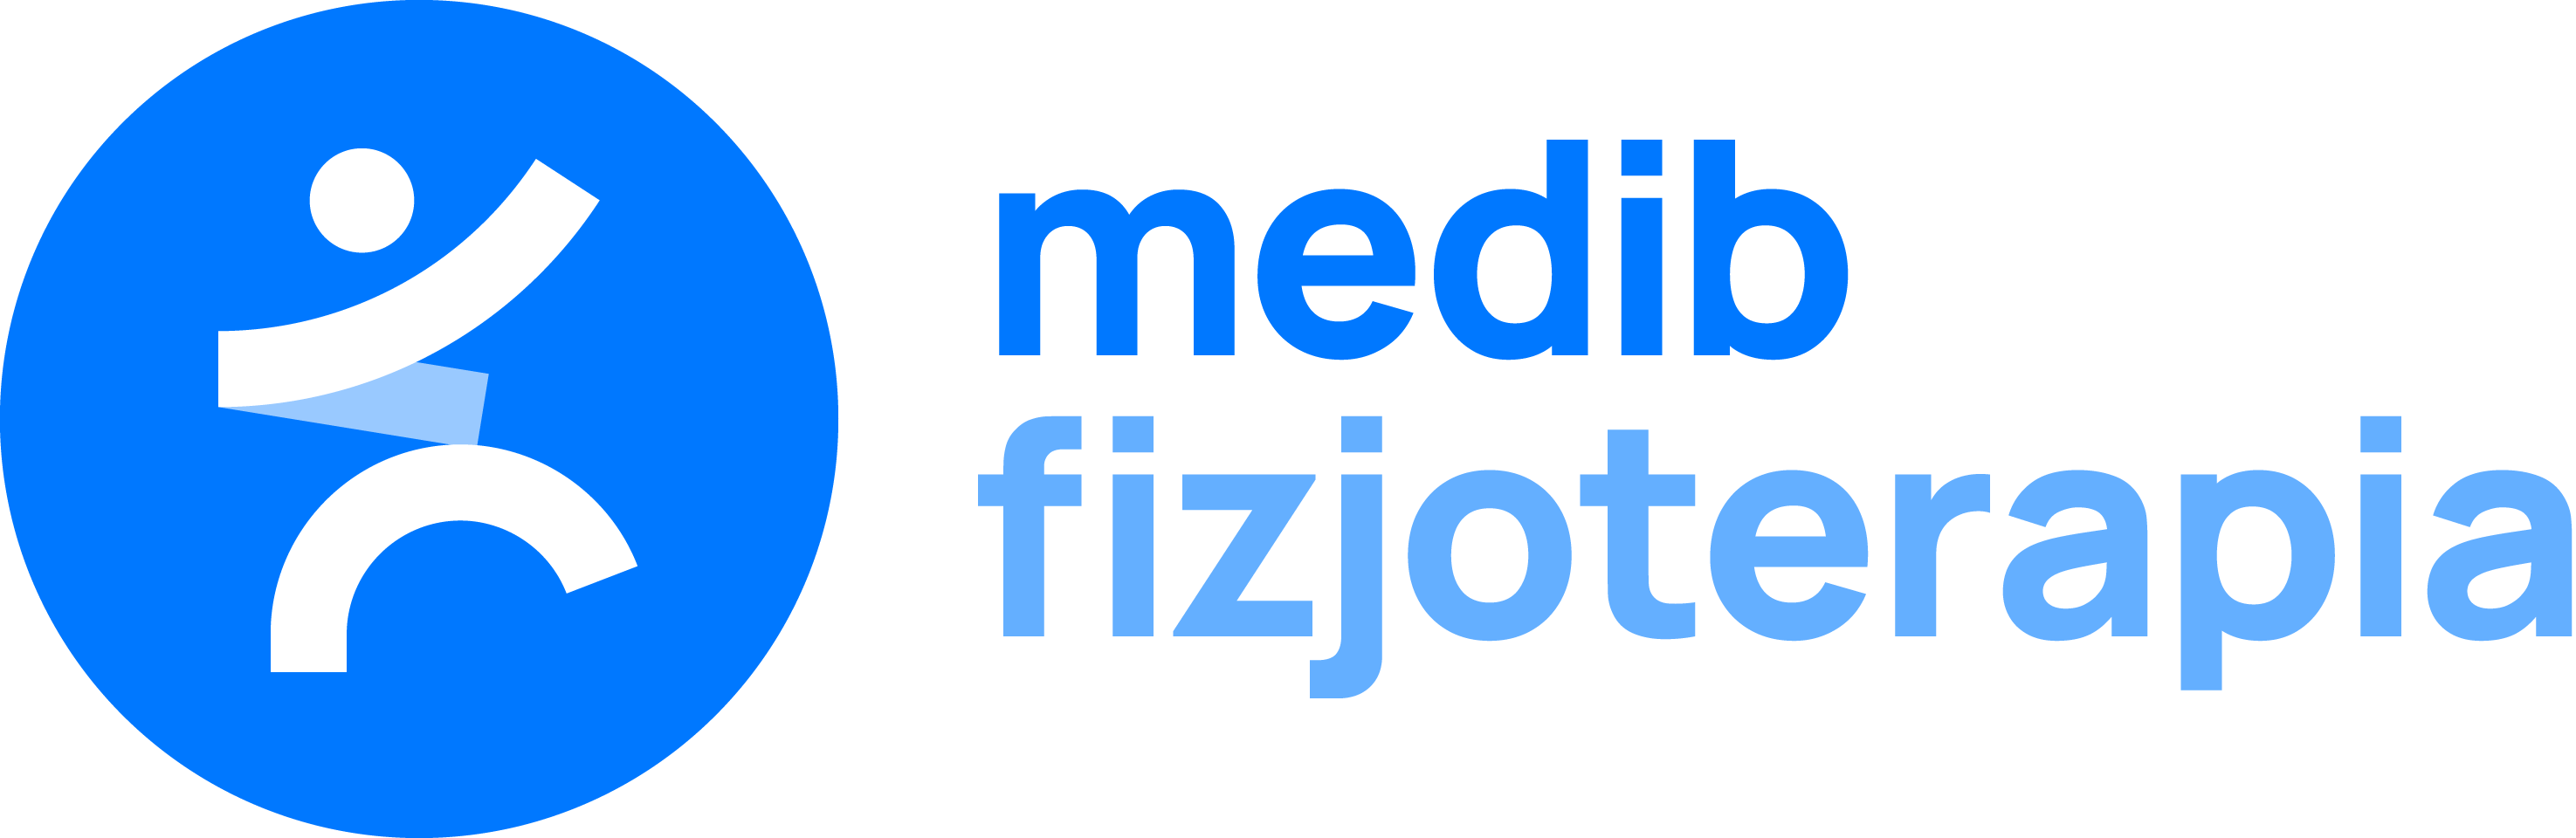 Medib Fizjoterapia